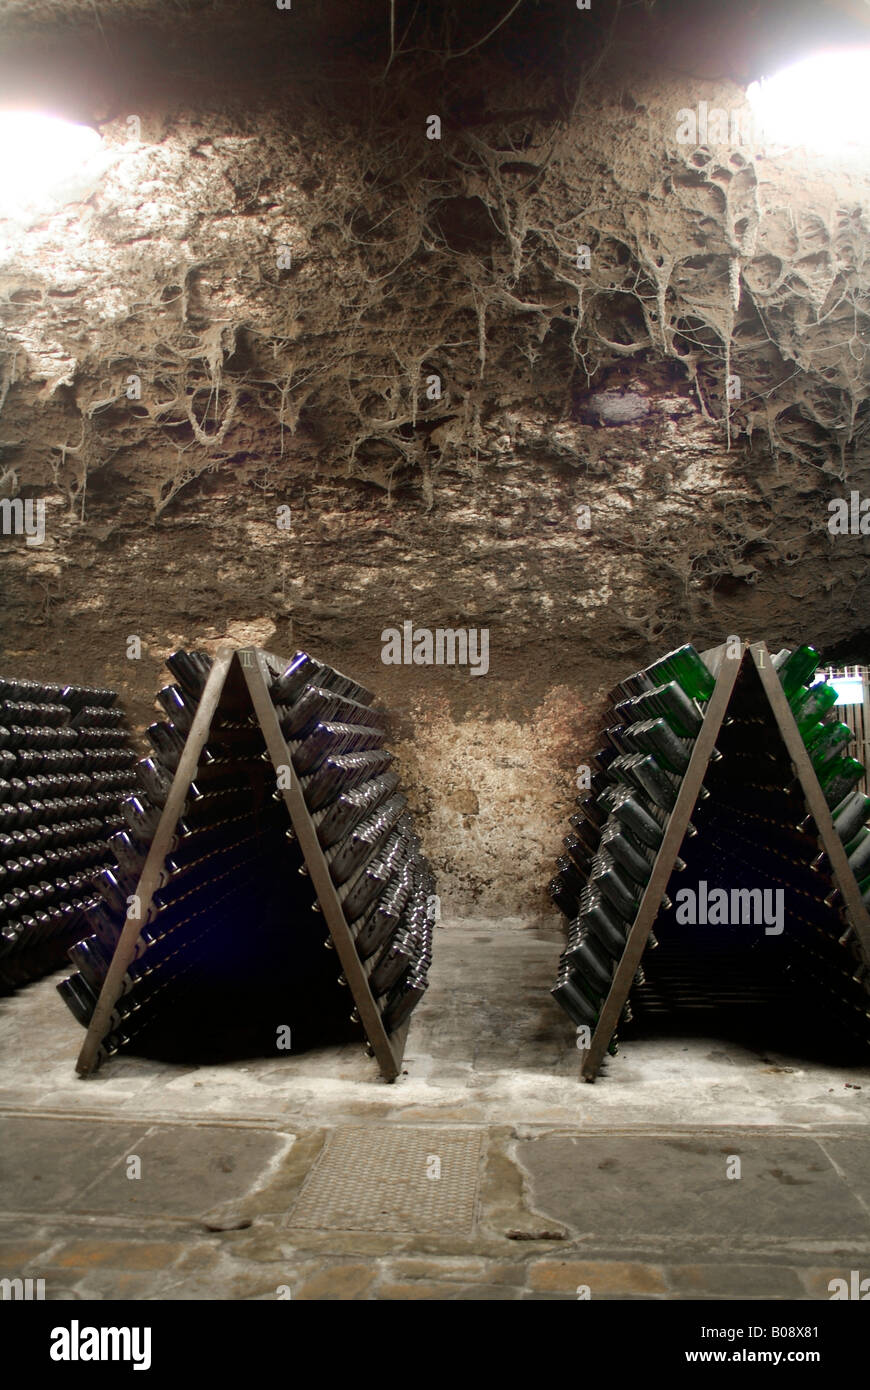 Wooden shelves for storing champagne bottles during the fermentation process in an old vault cellar, Kessler sparkling winery,  Stock Photo